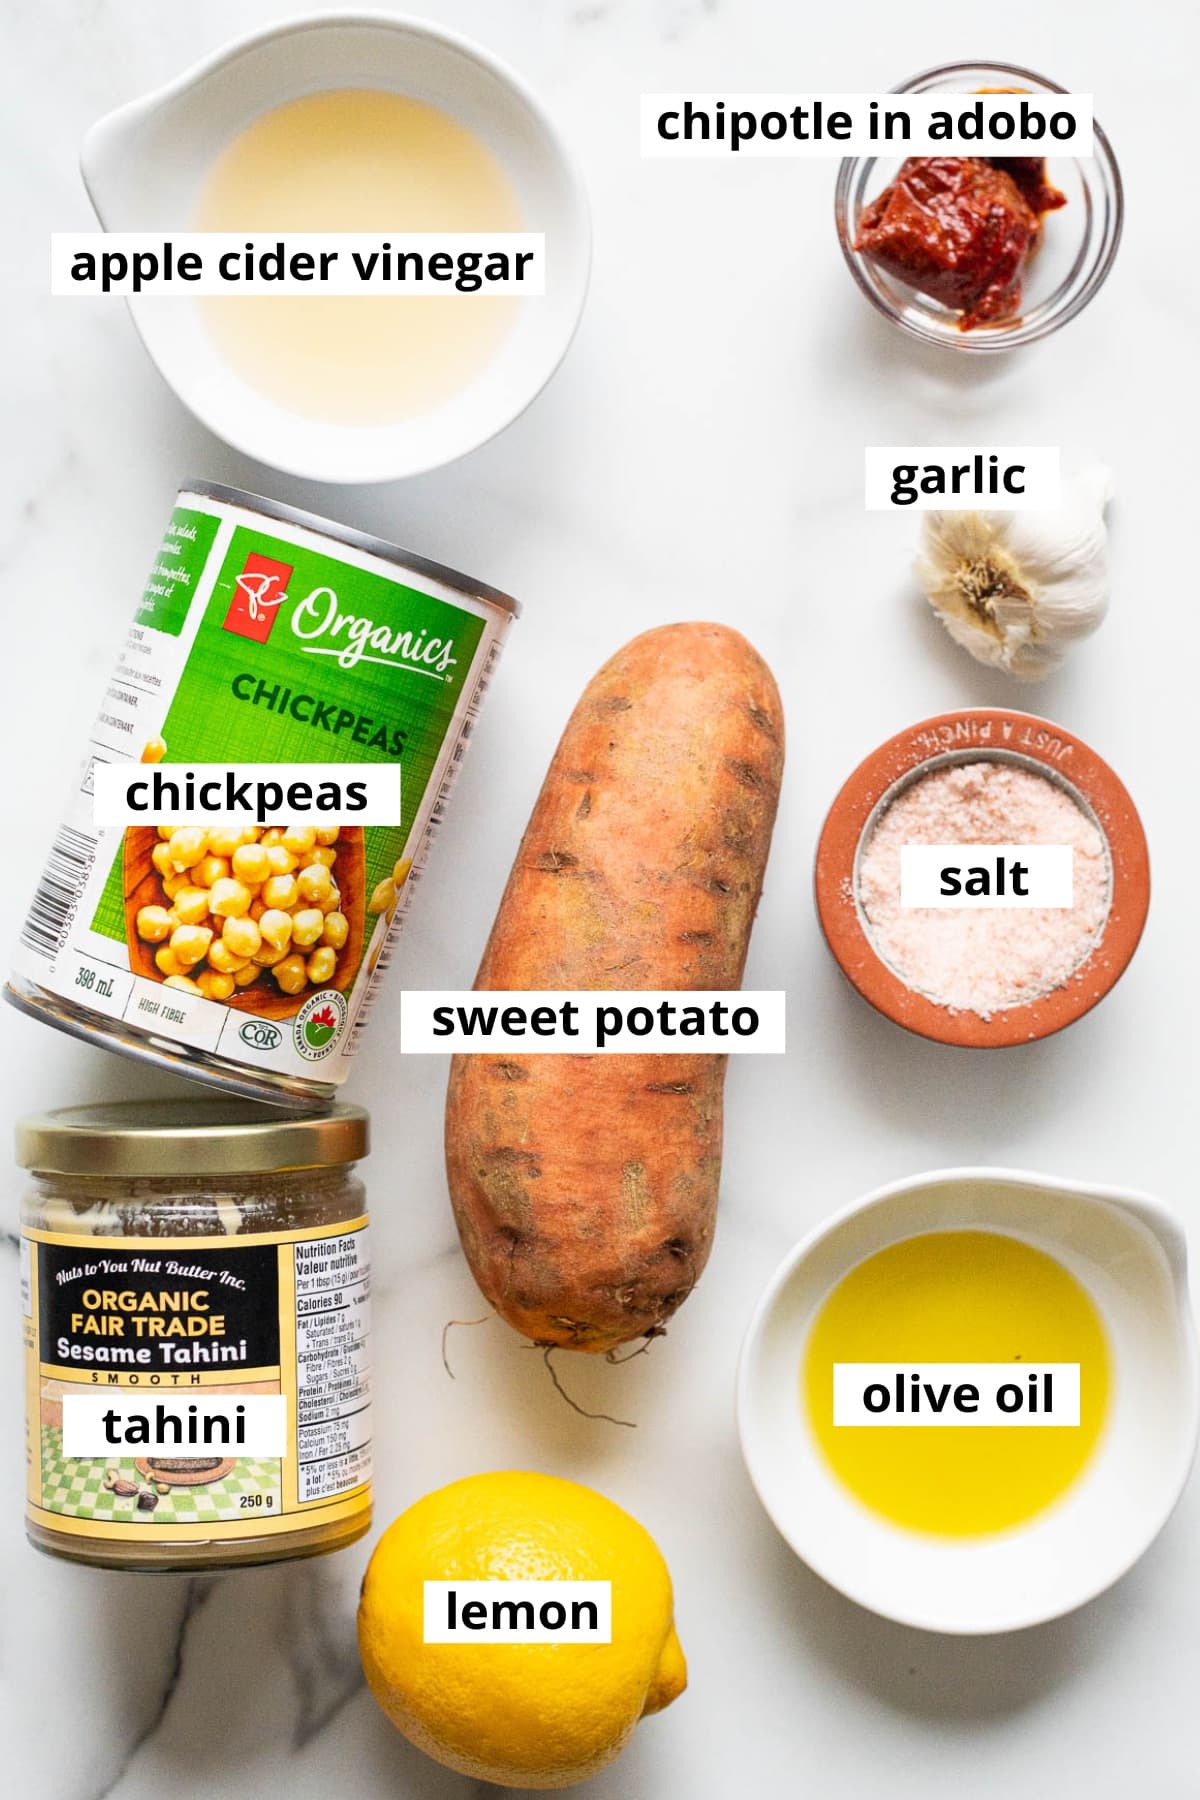 Chickpeas, sweet potato, tahini, garlic, chipotle in adobo sauce, apple cider vinegar, salt, lemon juice, olive oil.